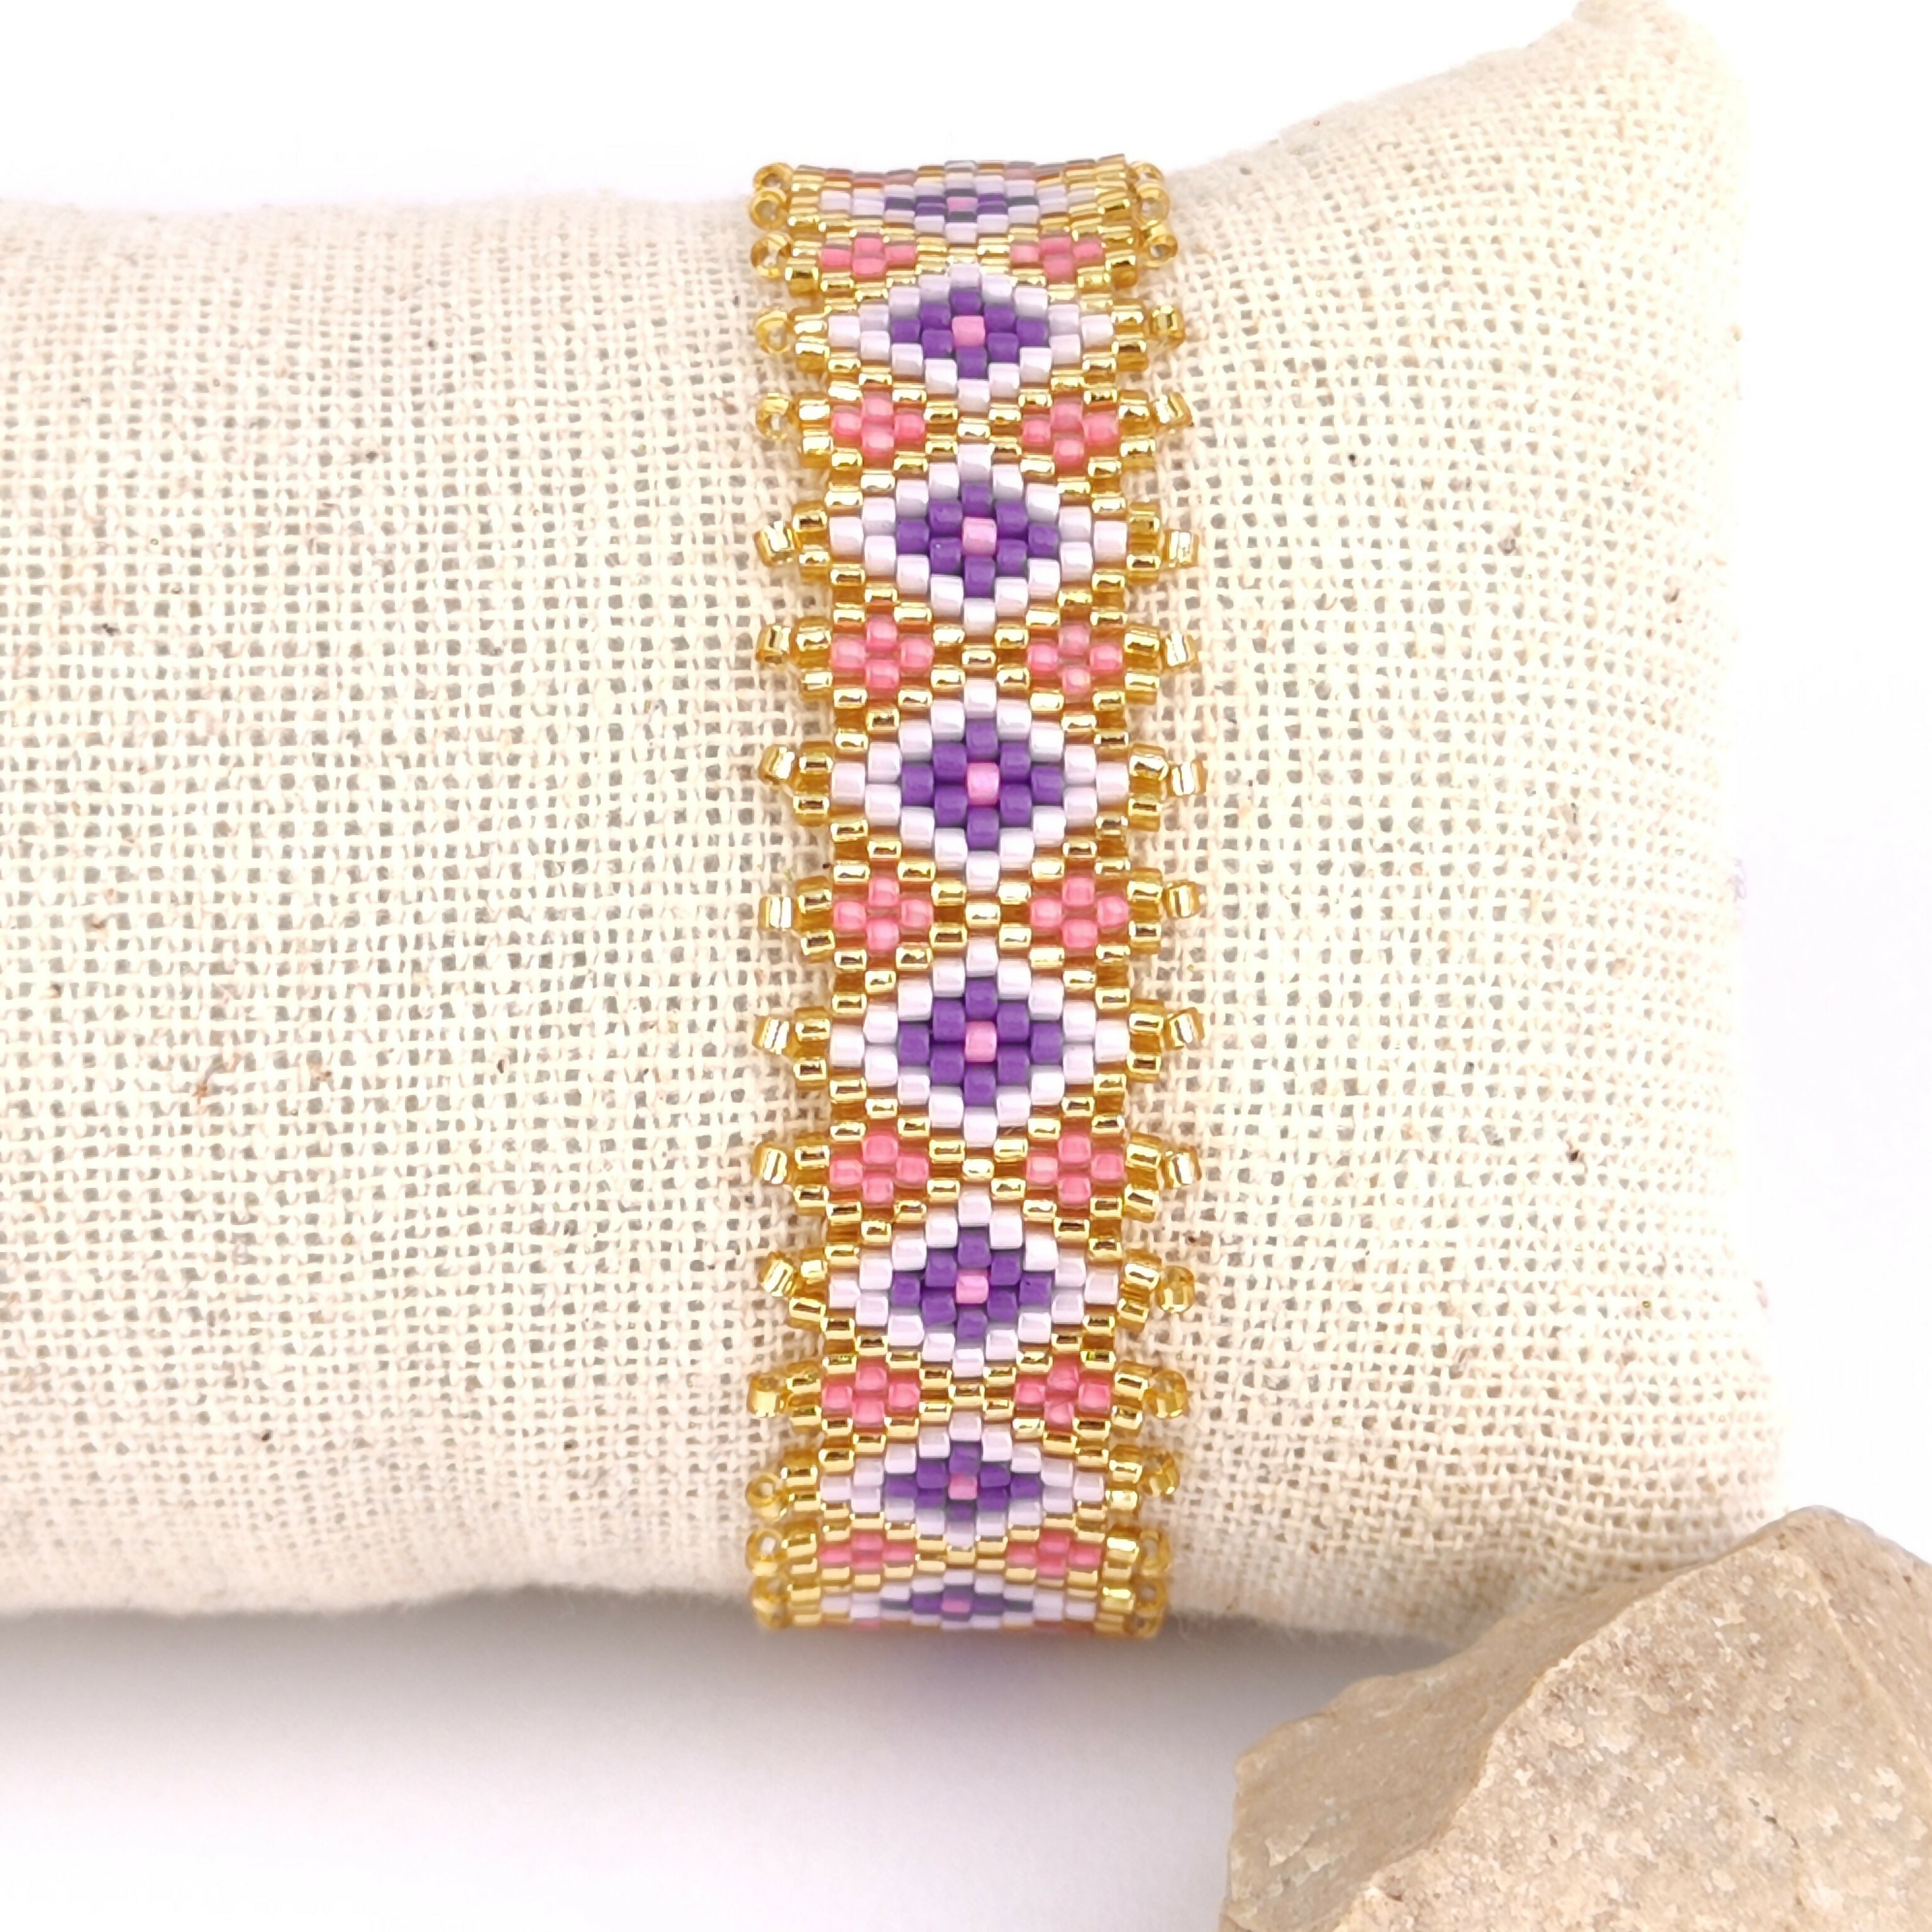 Handwoven Beaded Bracelet - Mosaic Tile Motif